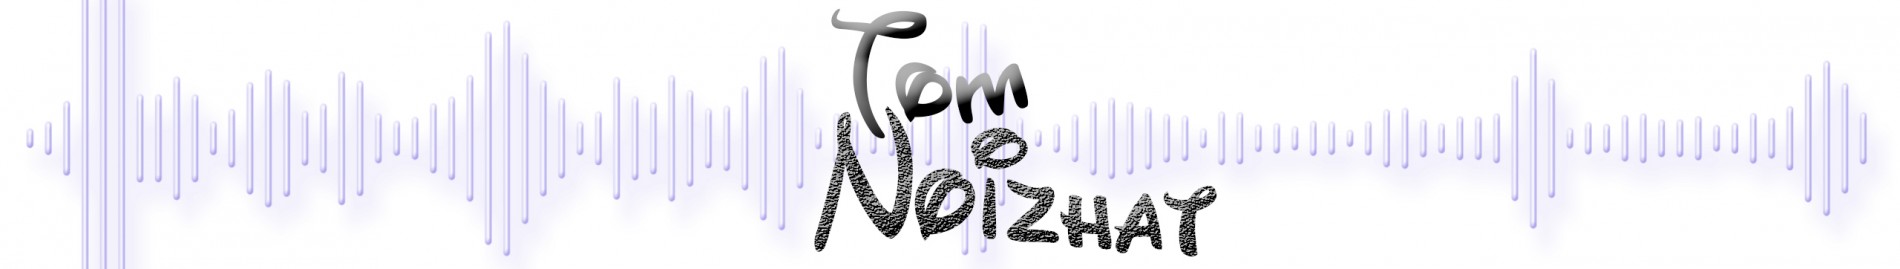 Tom Noizhat